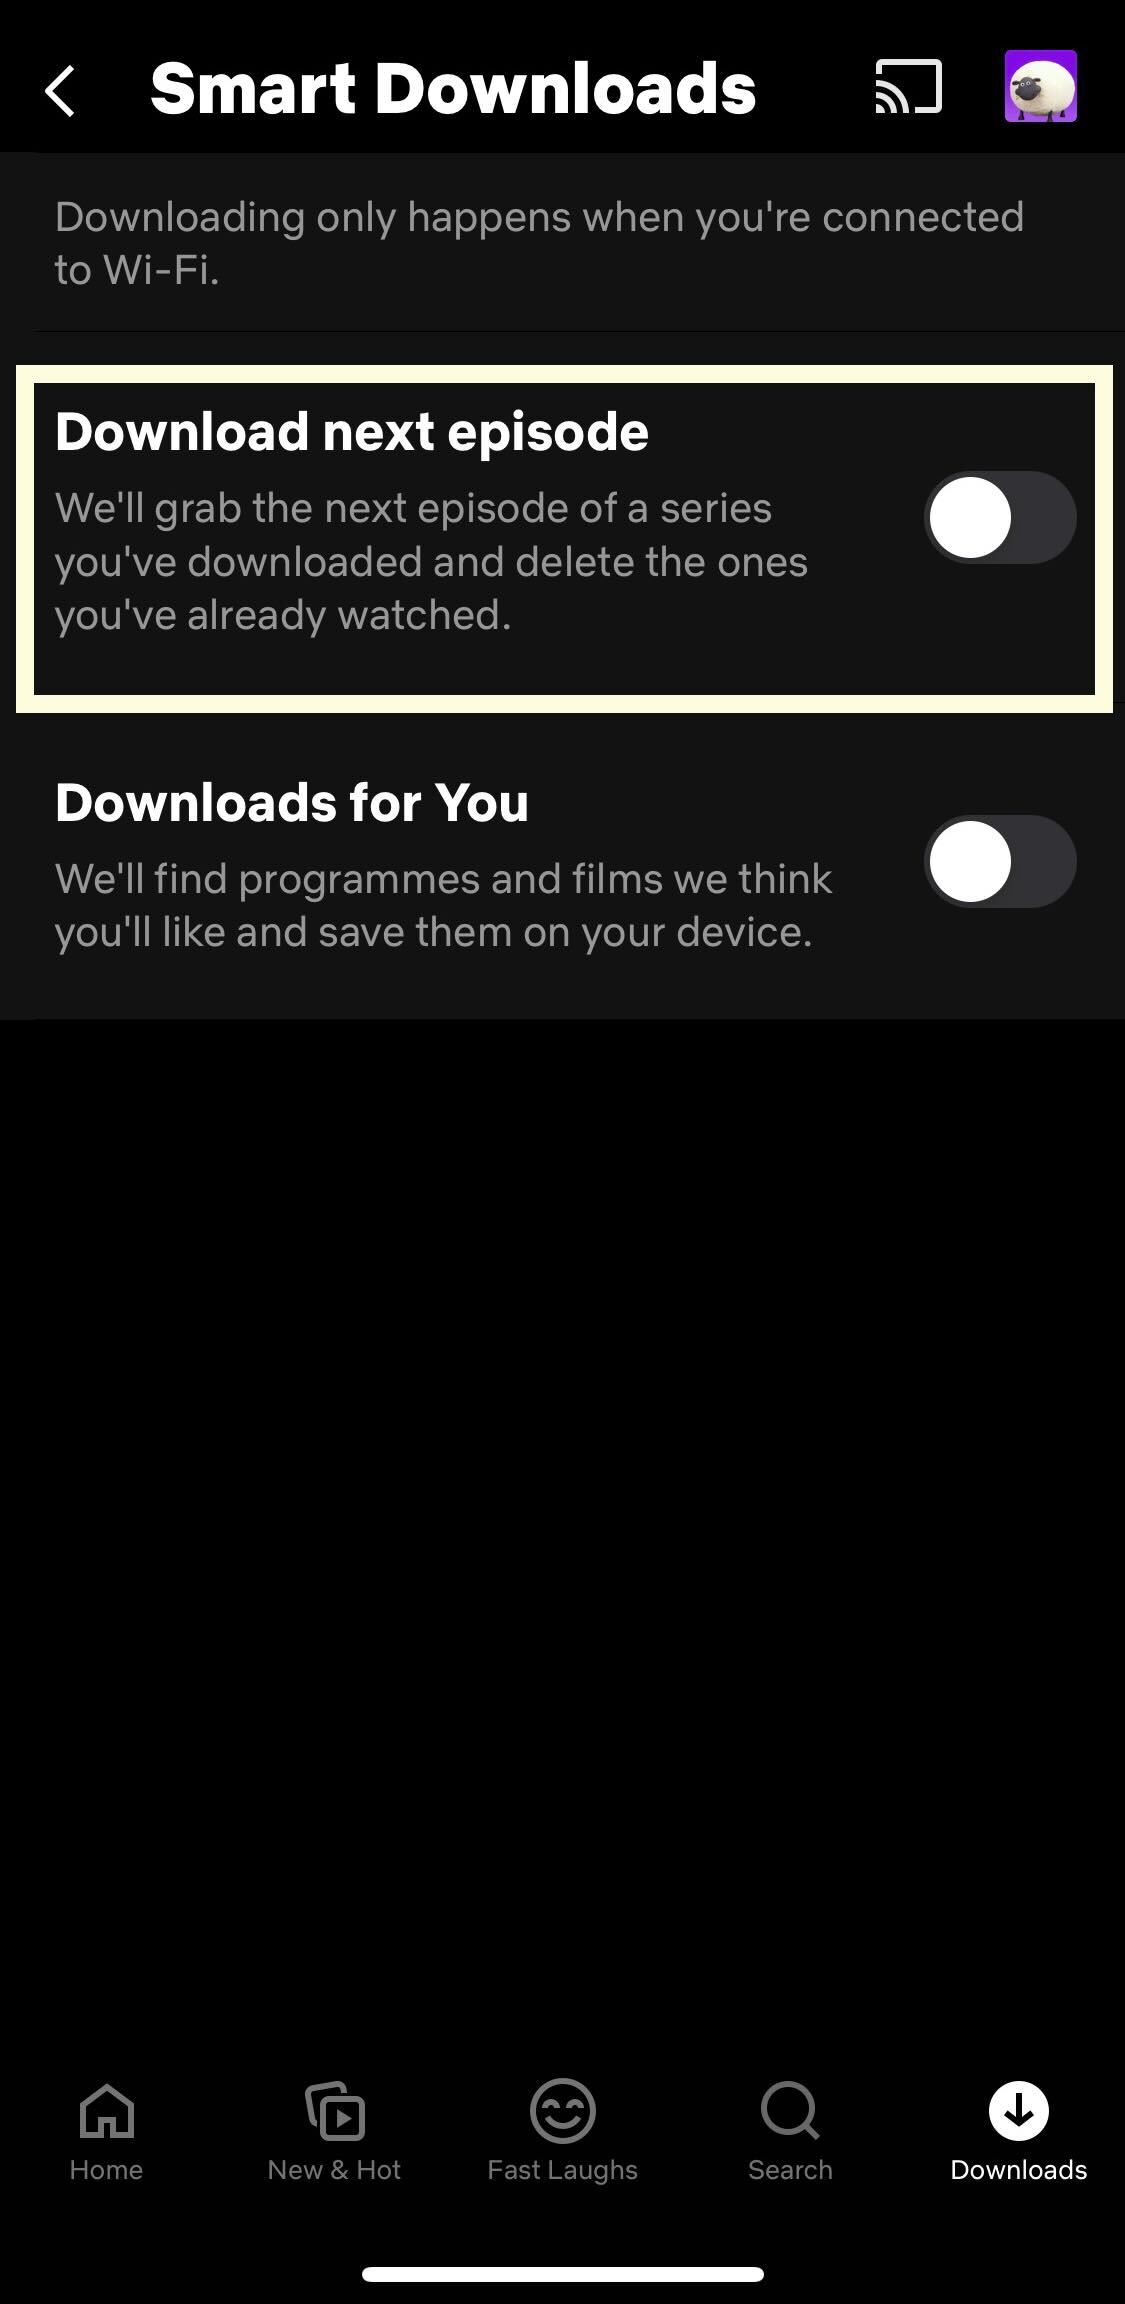 Turn on smart downloads